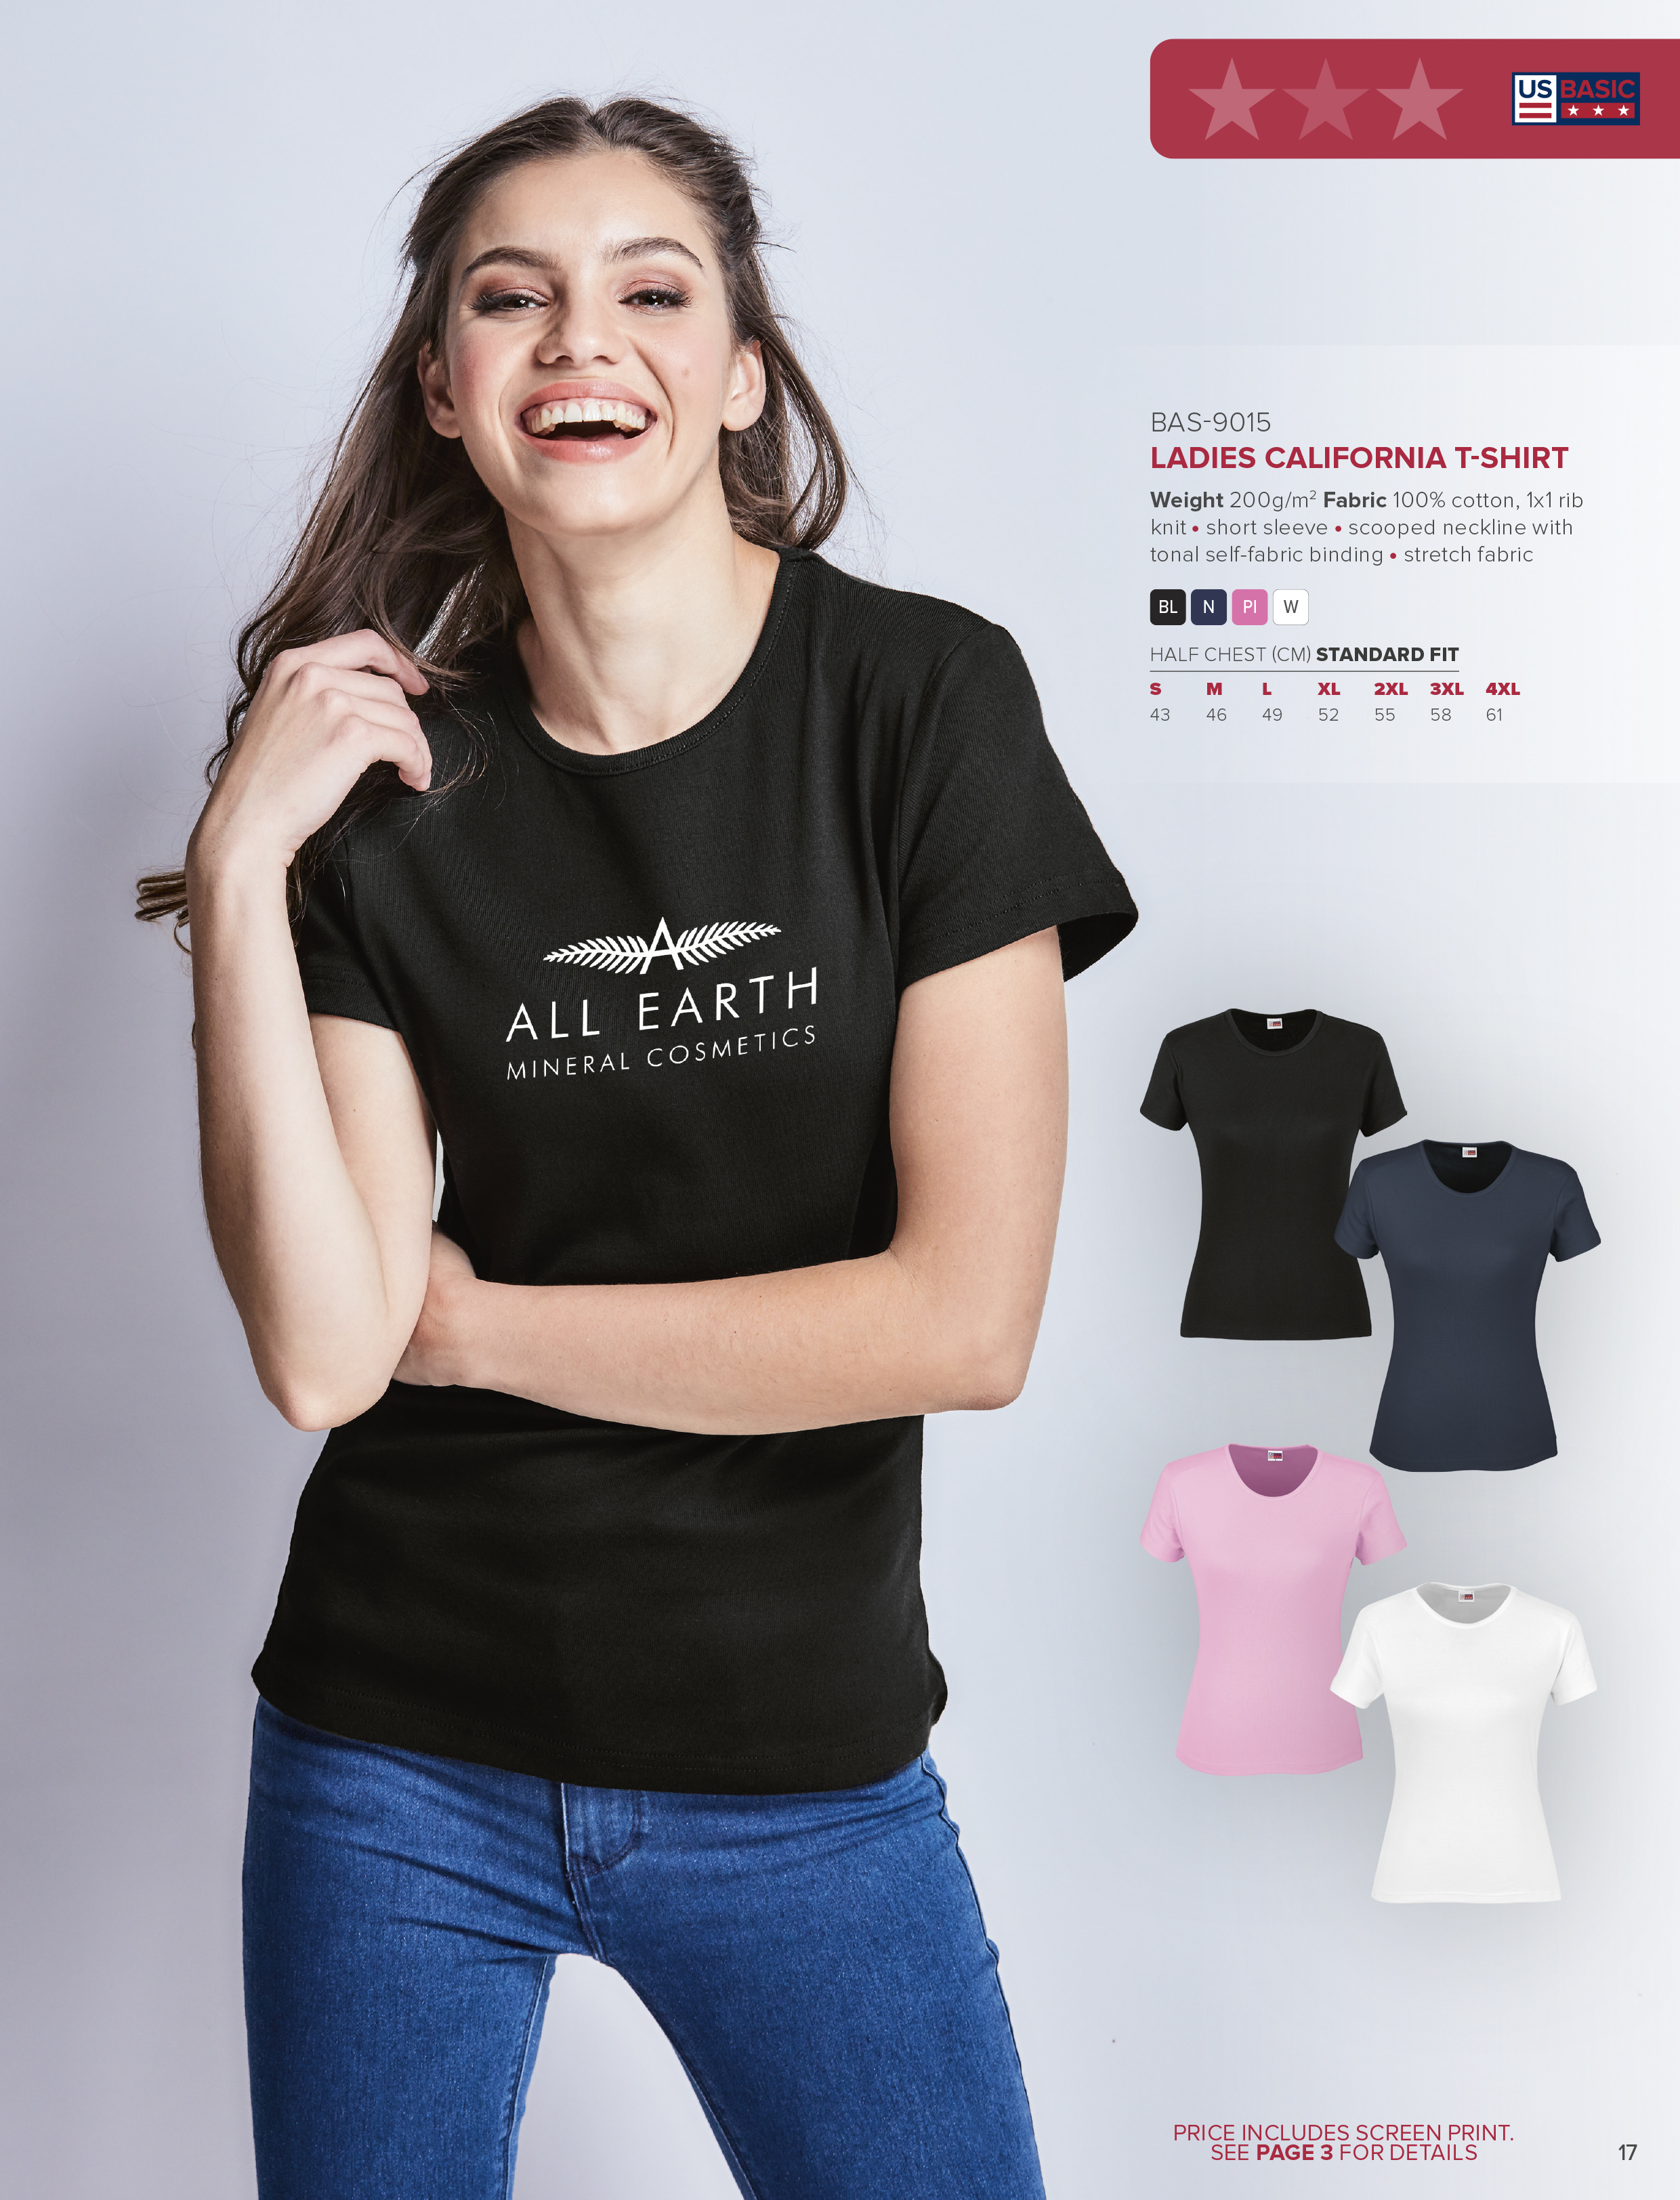 BAS-9015 - Ladies California T-Shirt - Catalogue Image